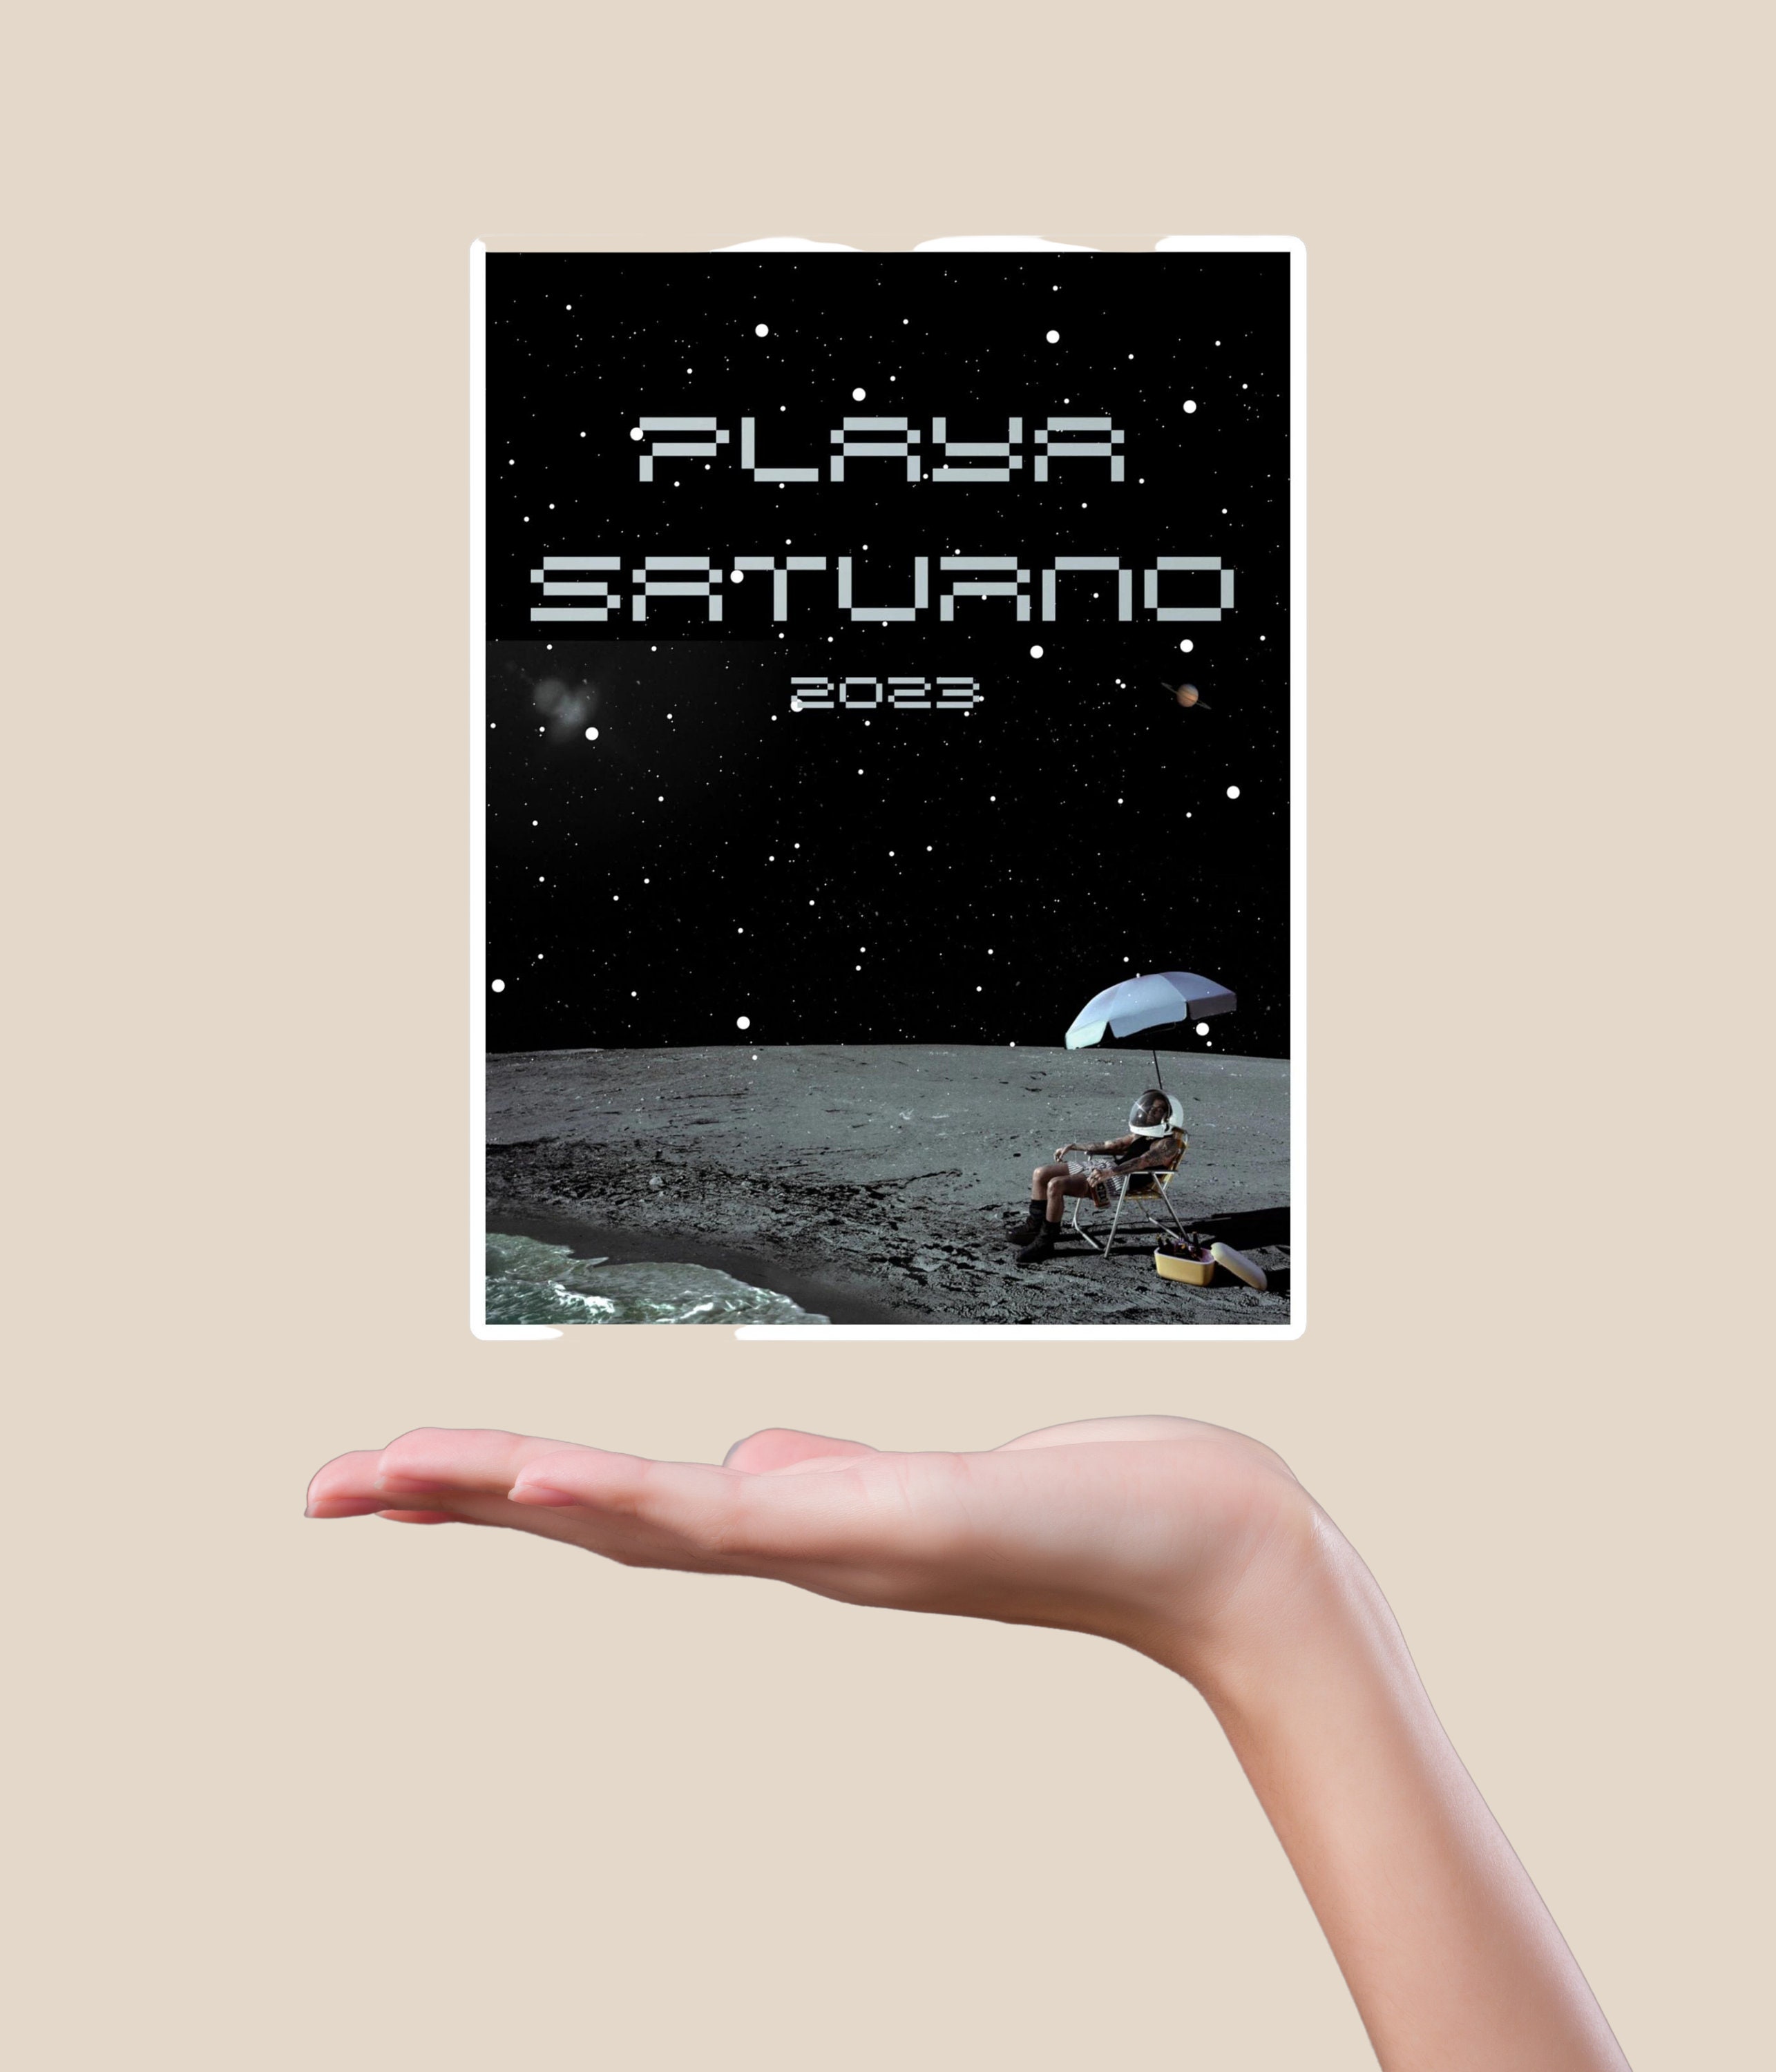 RAUW ALEJANDRO / SATURNO / Digital Printable, Album Cover, Poster